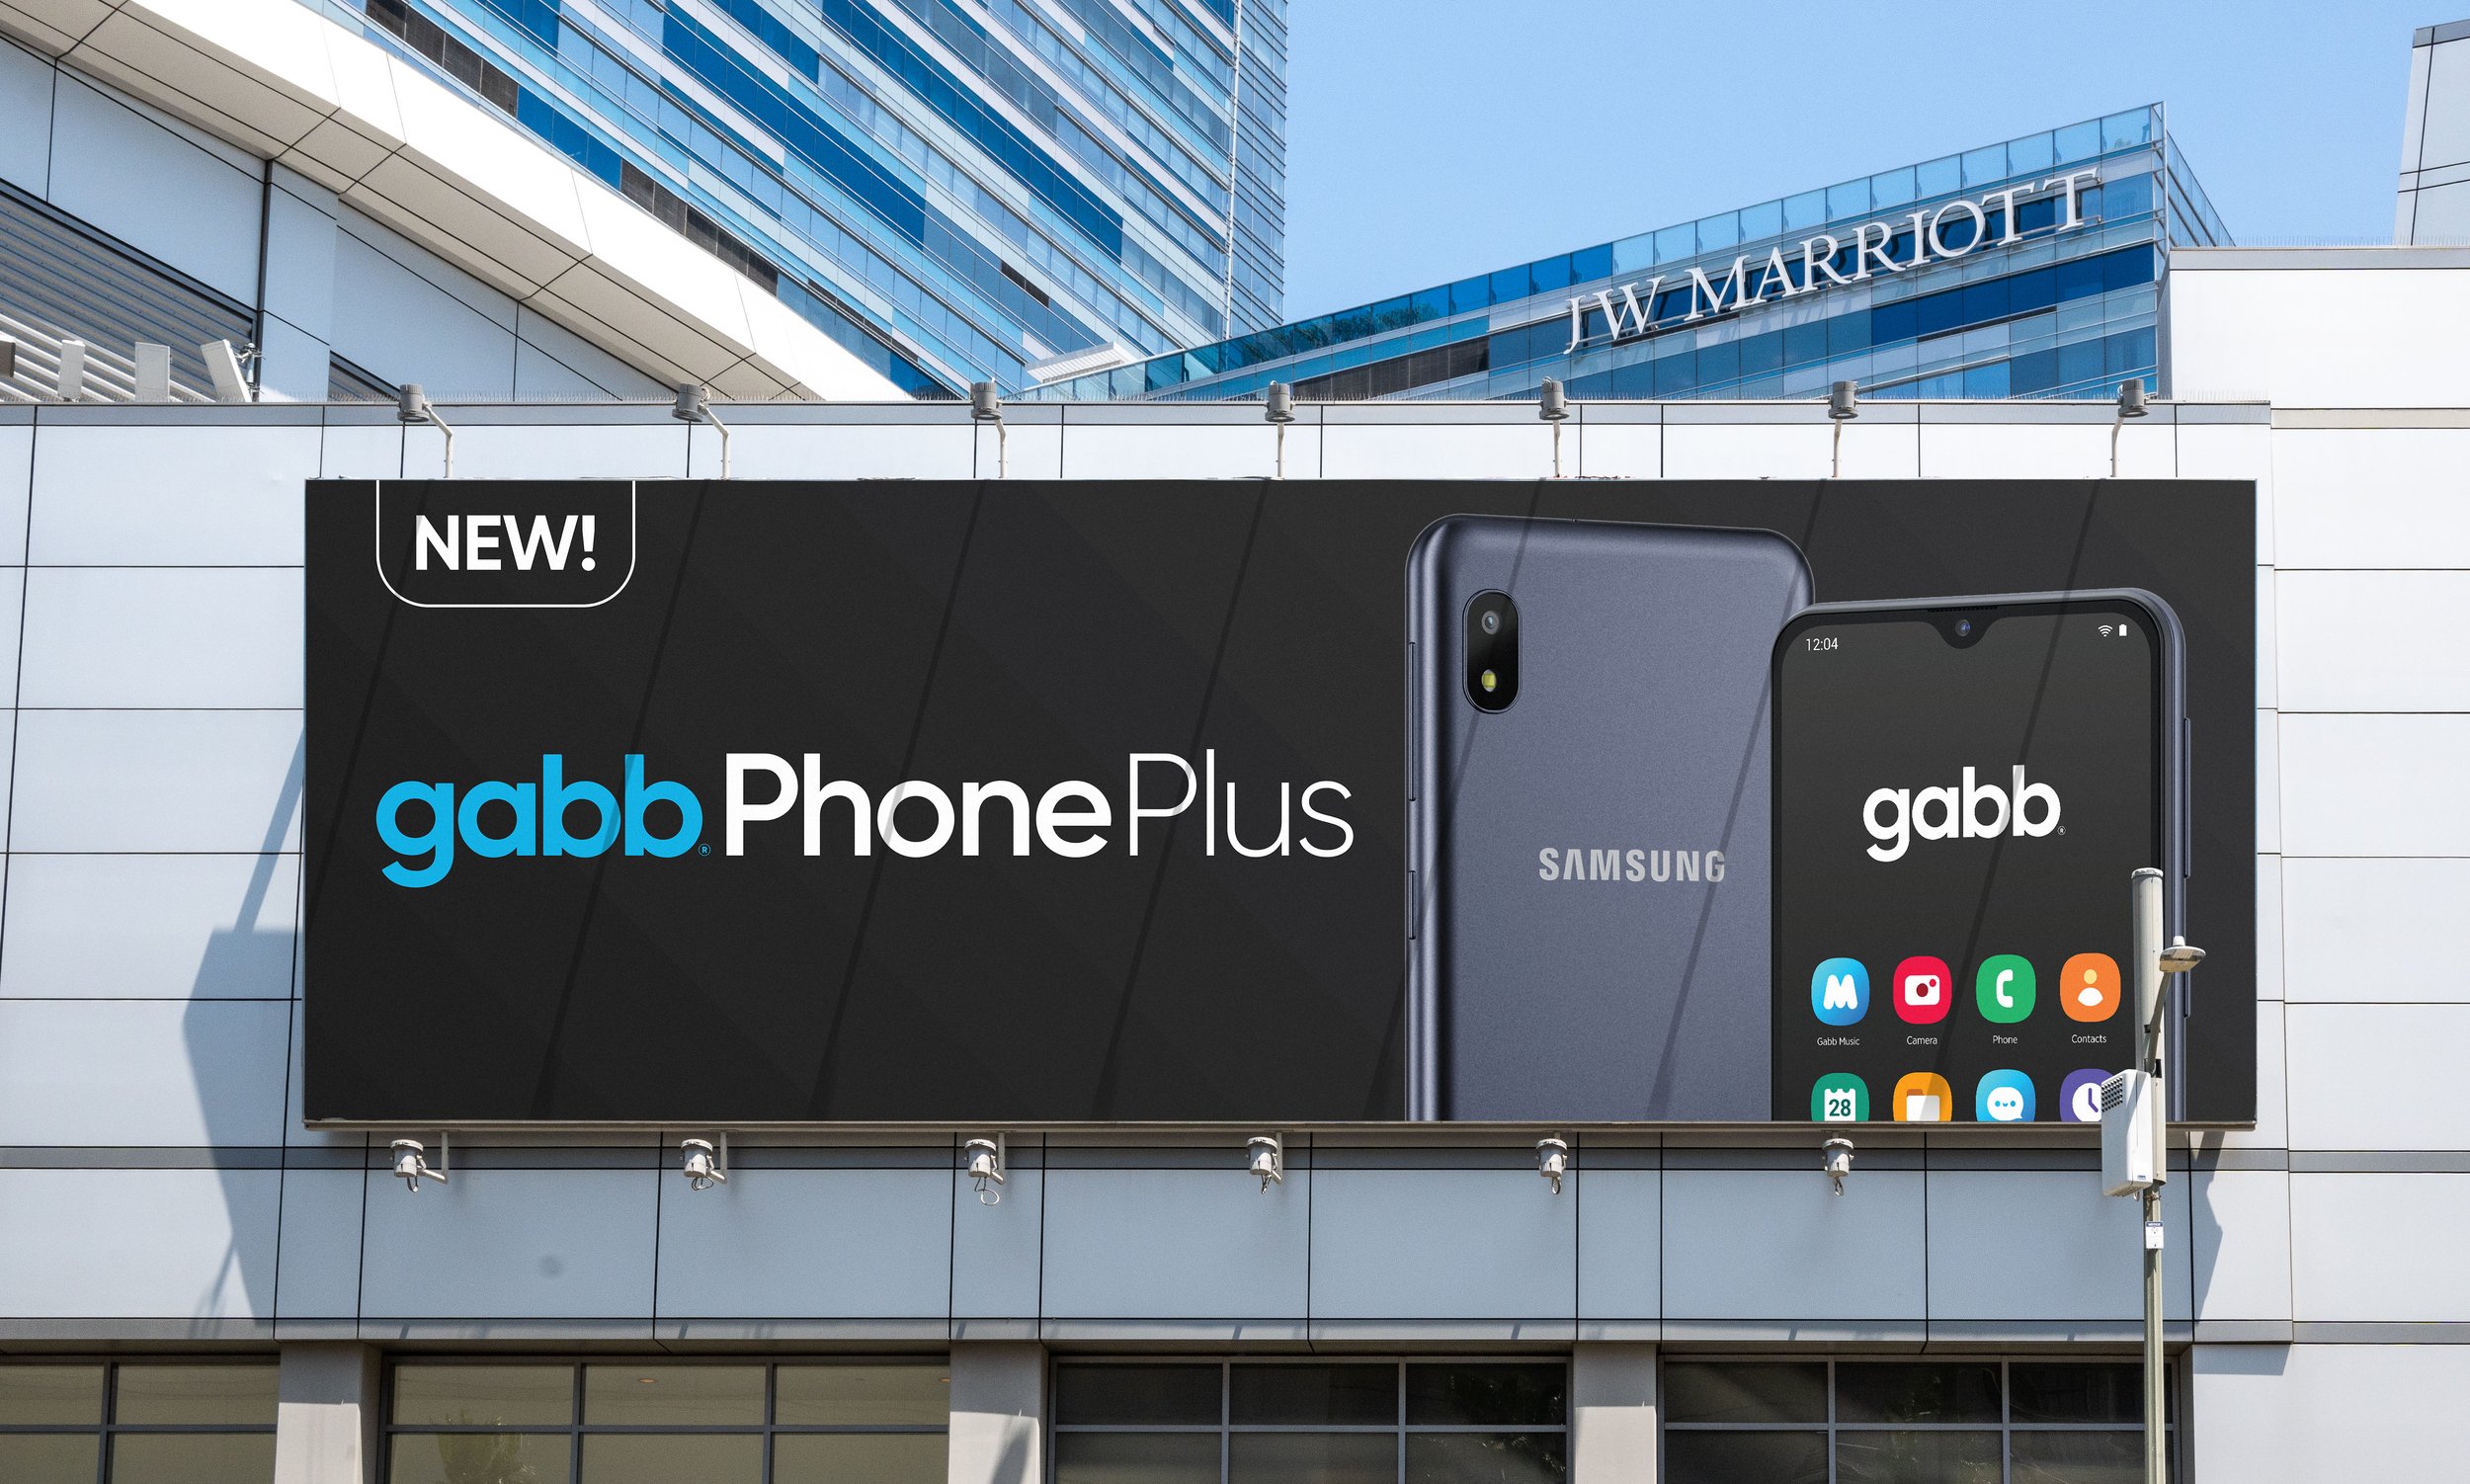 Gabb Phone Plus Billboard.jpg